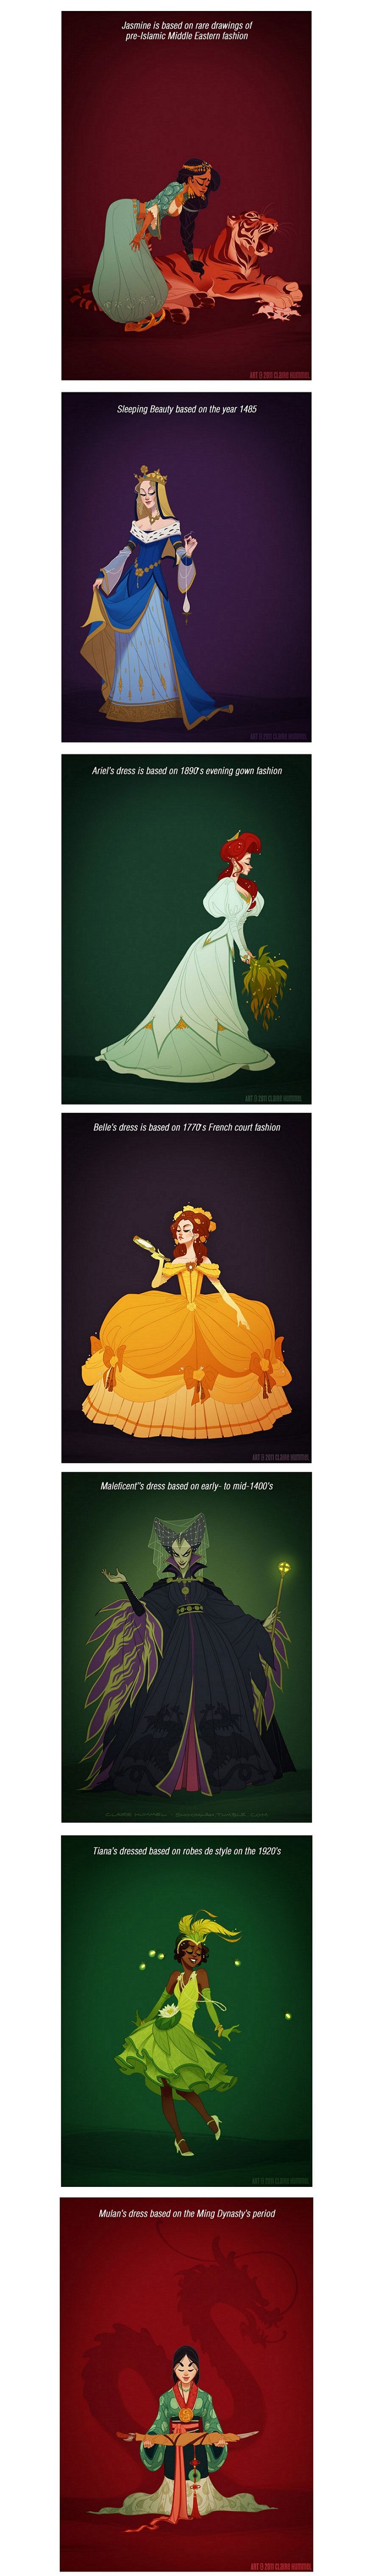 Disney Princesses In Accurate Period Costume